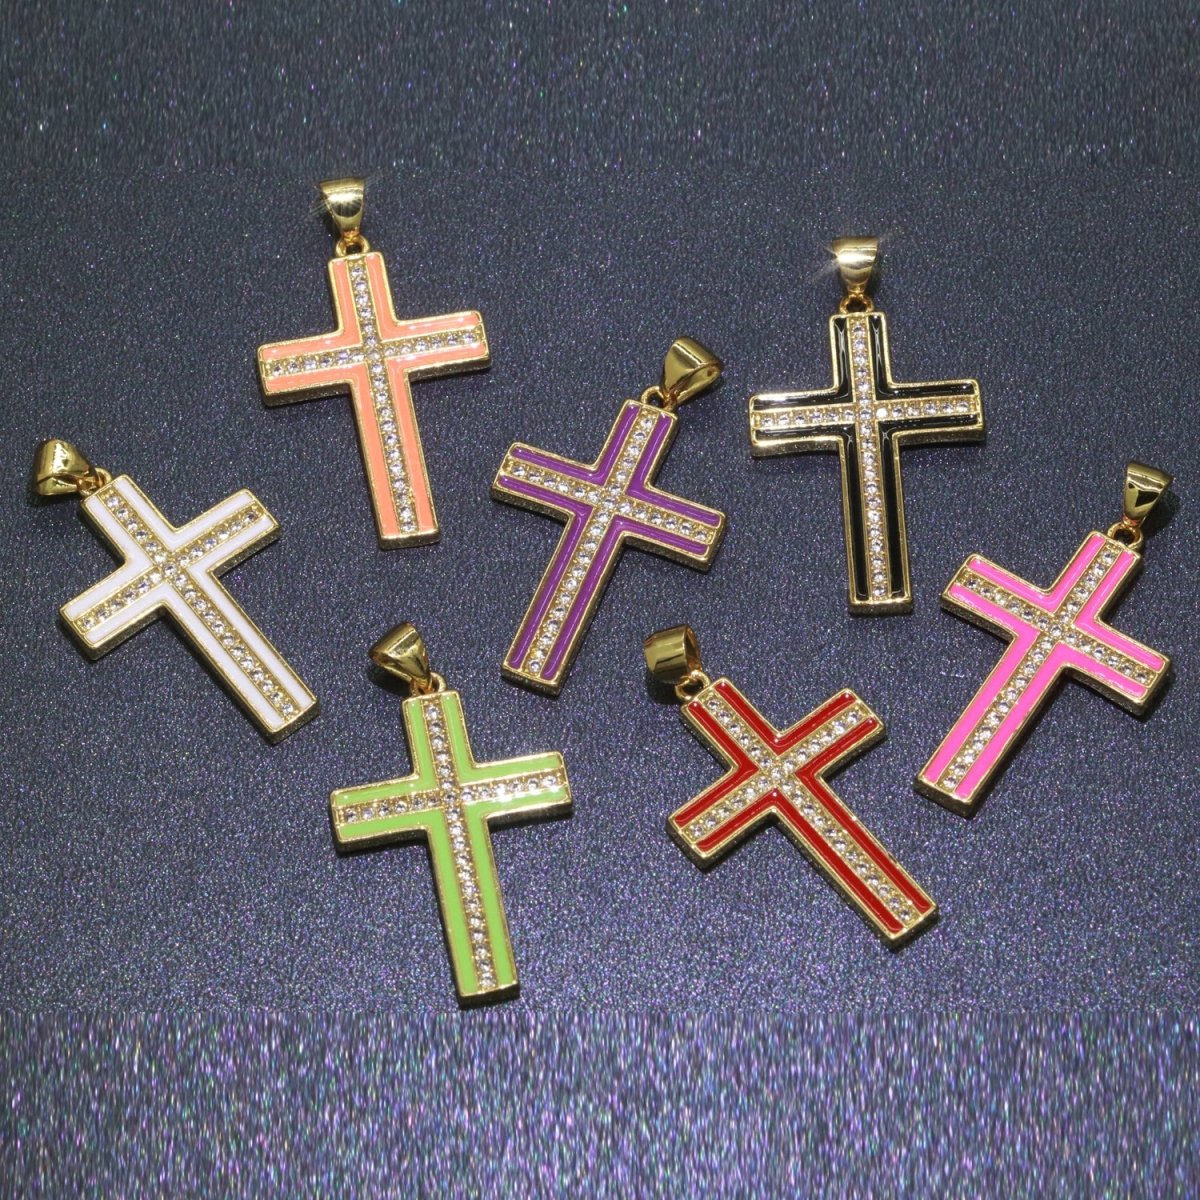 14K Gold Filled Cross Charm, Enamel Cross for Religious Statement Jewelry J-286~J-295 - DLUXCA